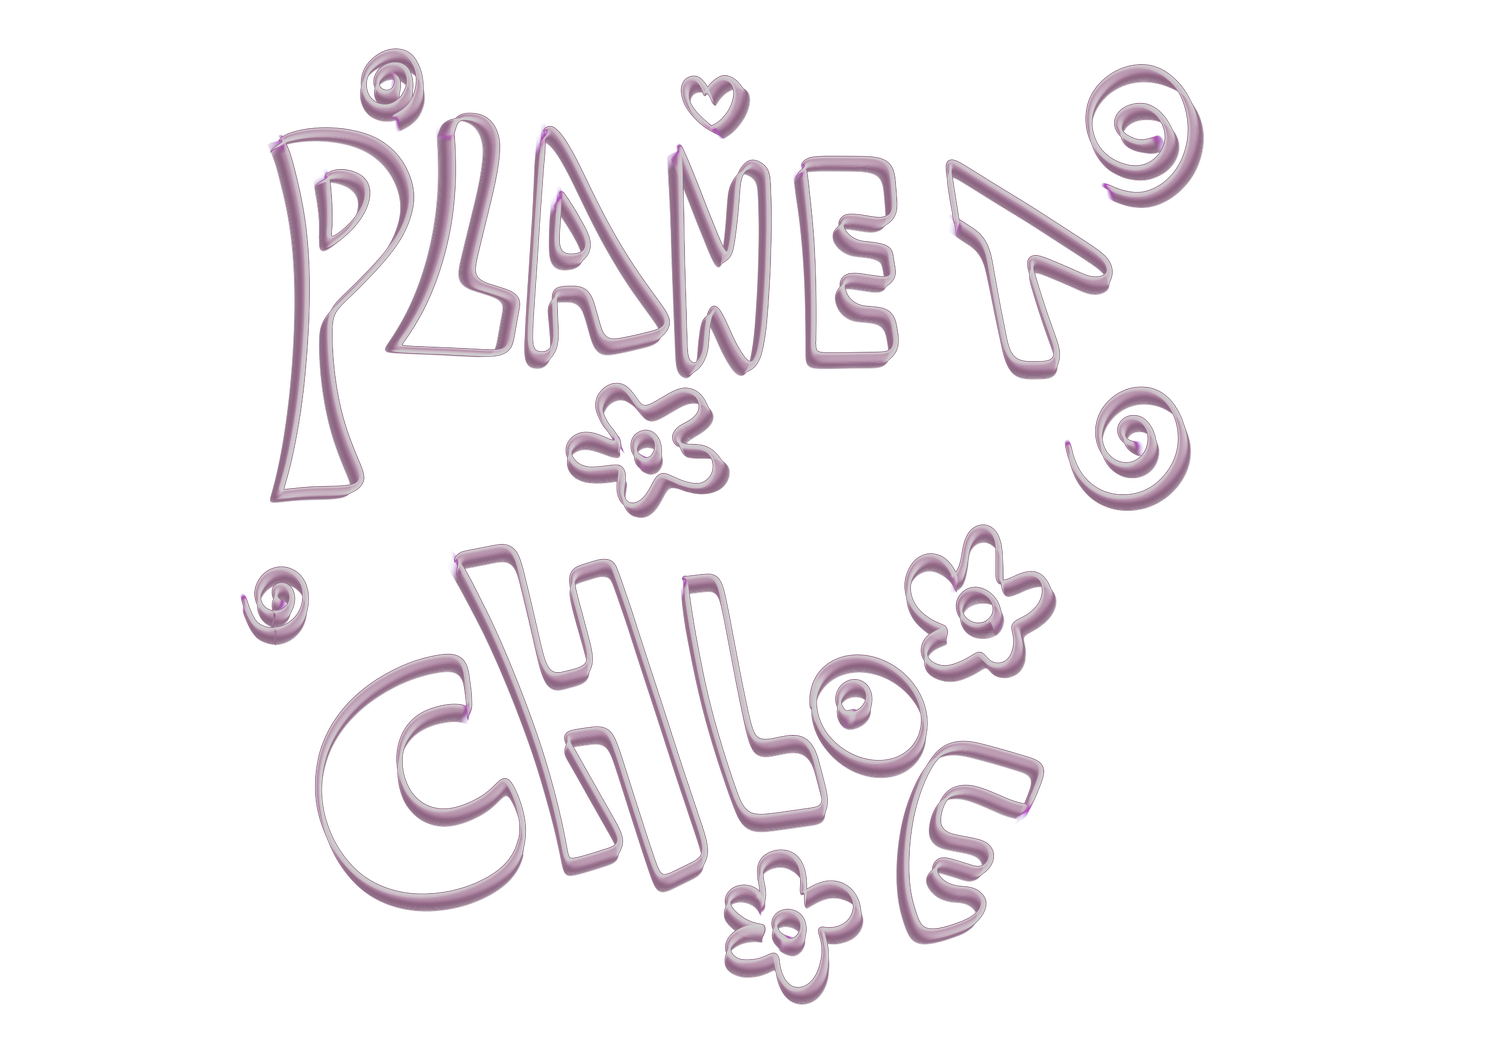 Planet Chloé